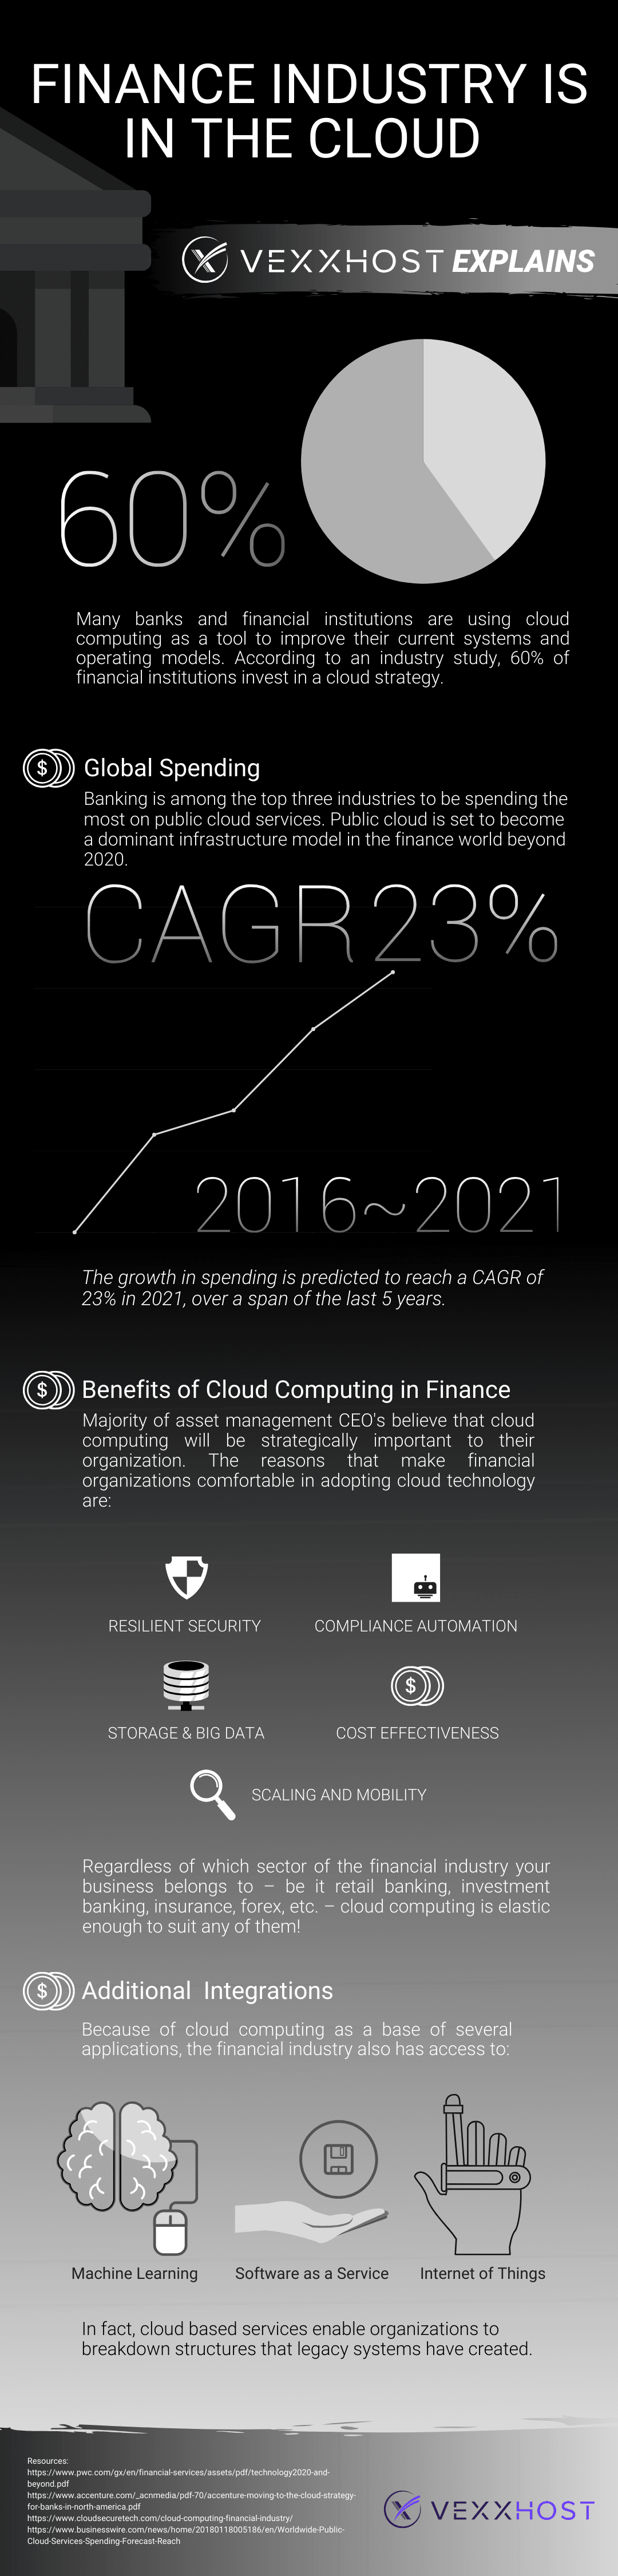 Finance Industry Cloud Computing